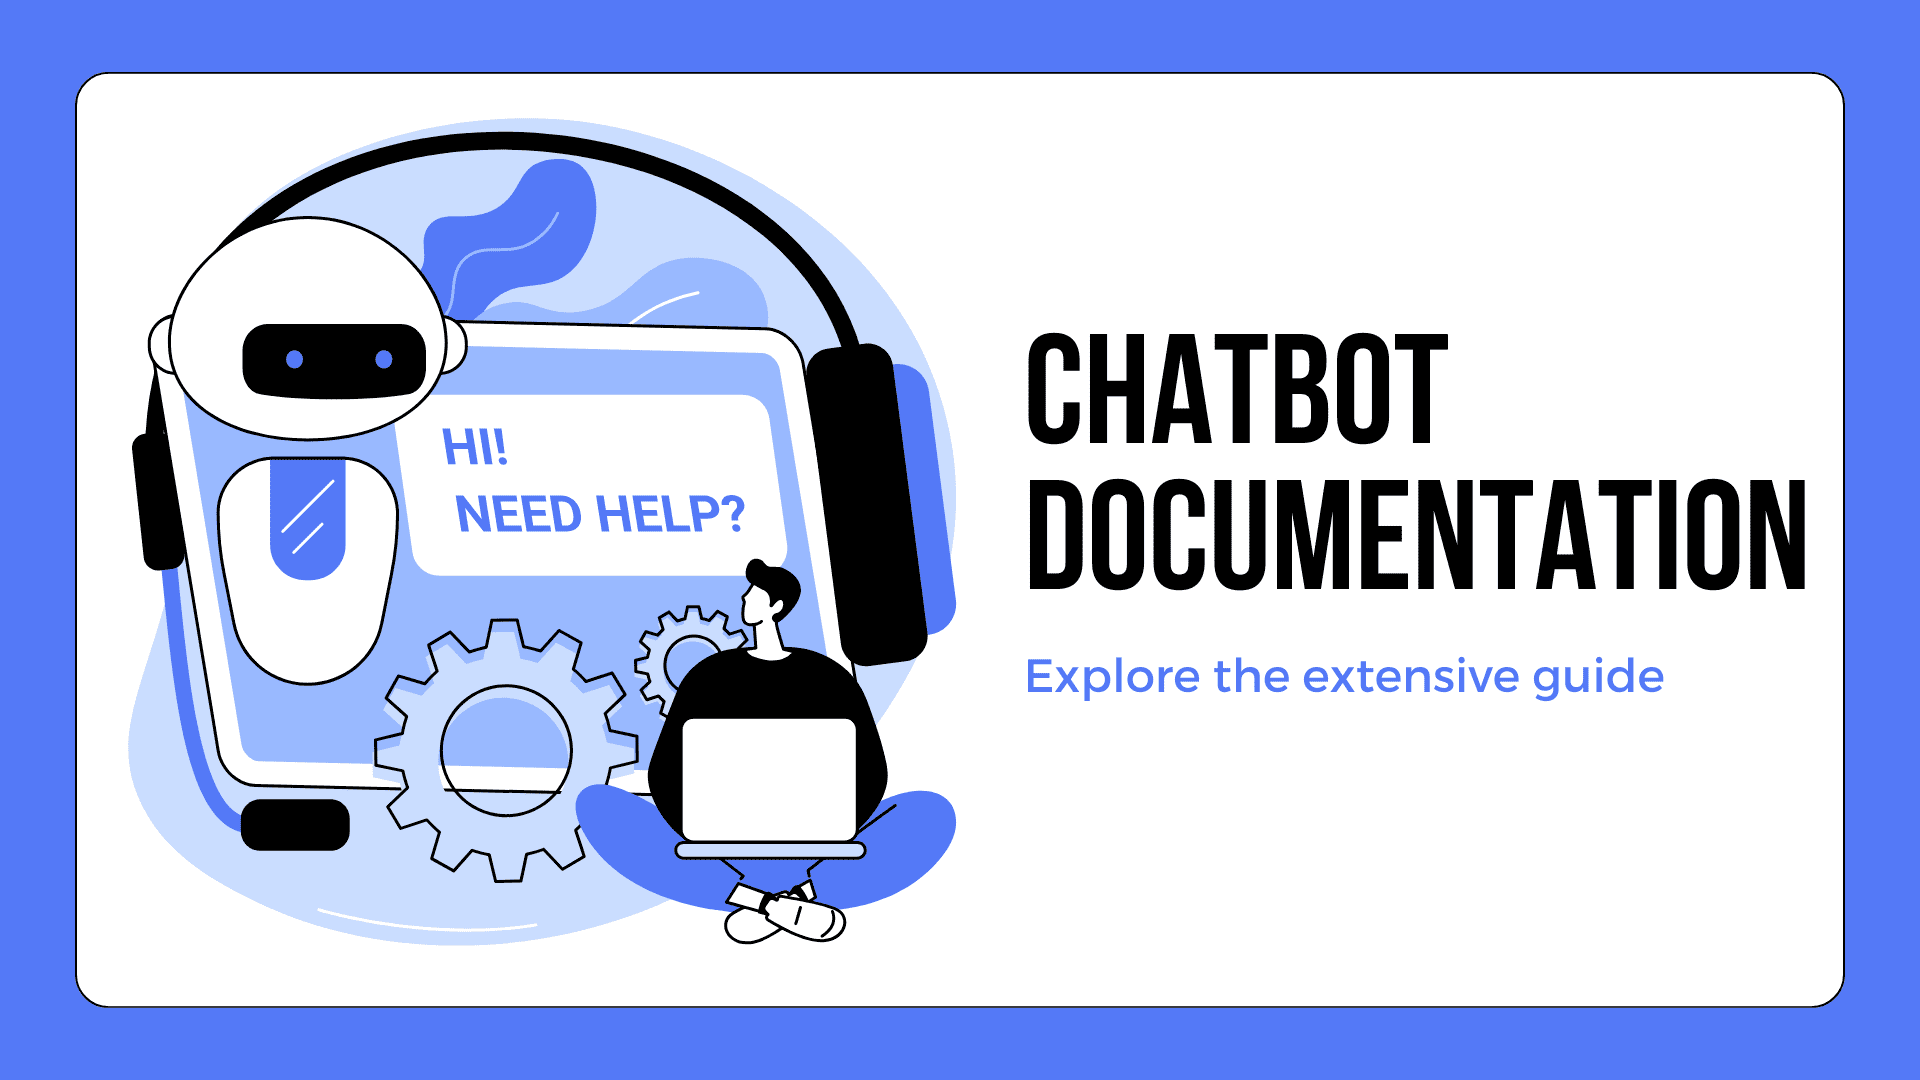 Chatbot Image